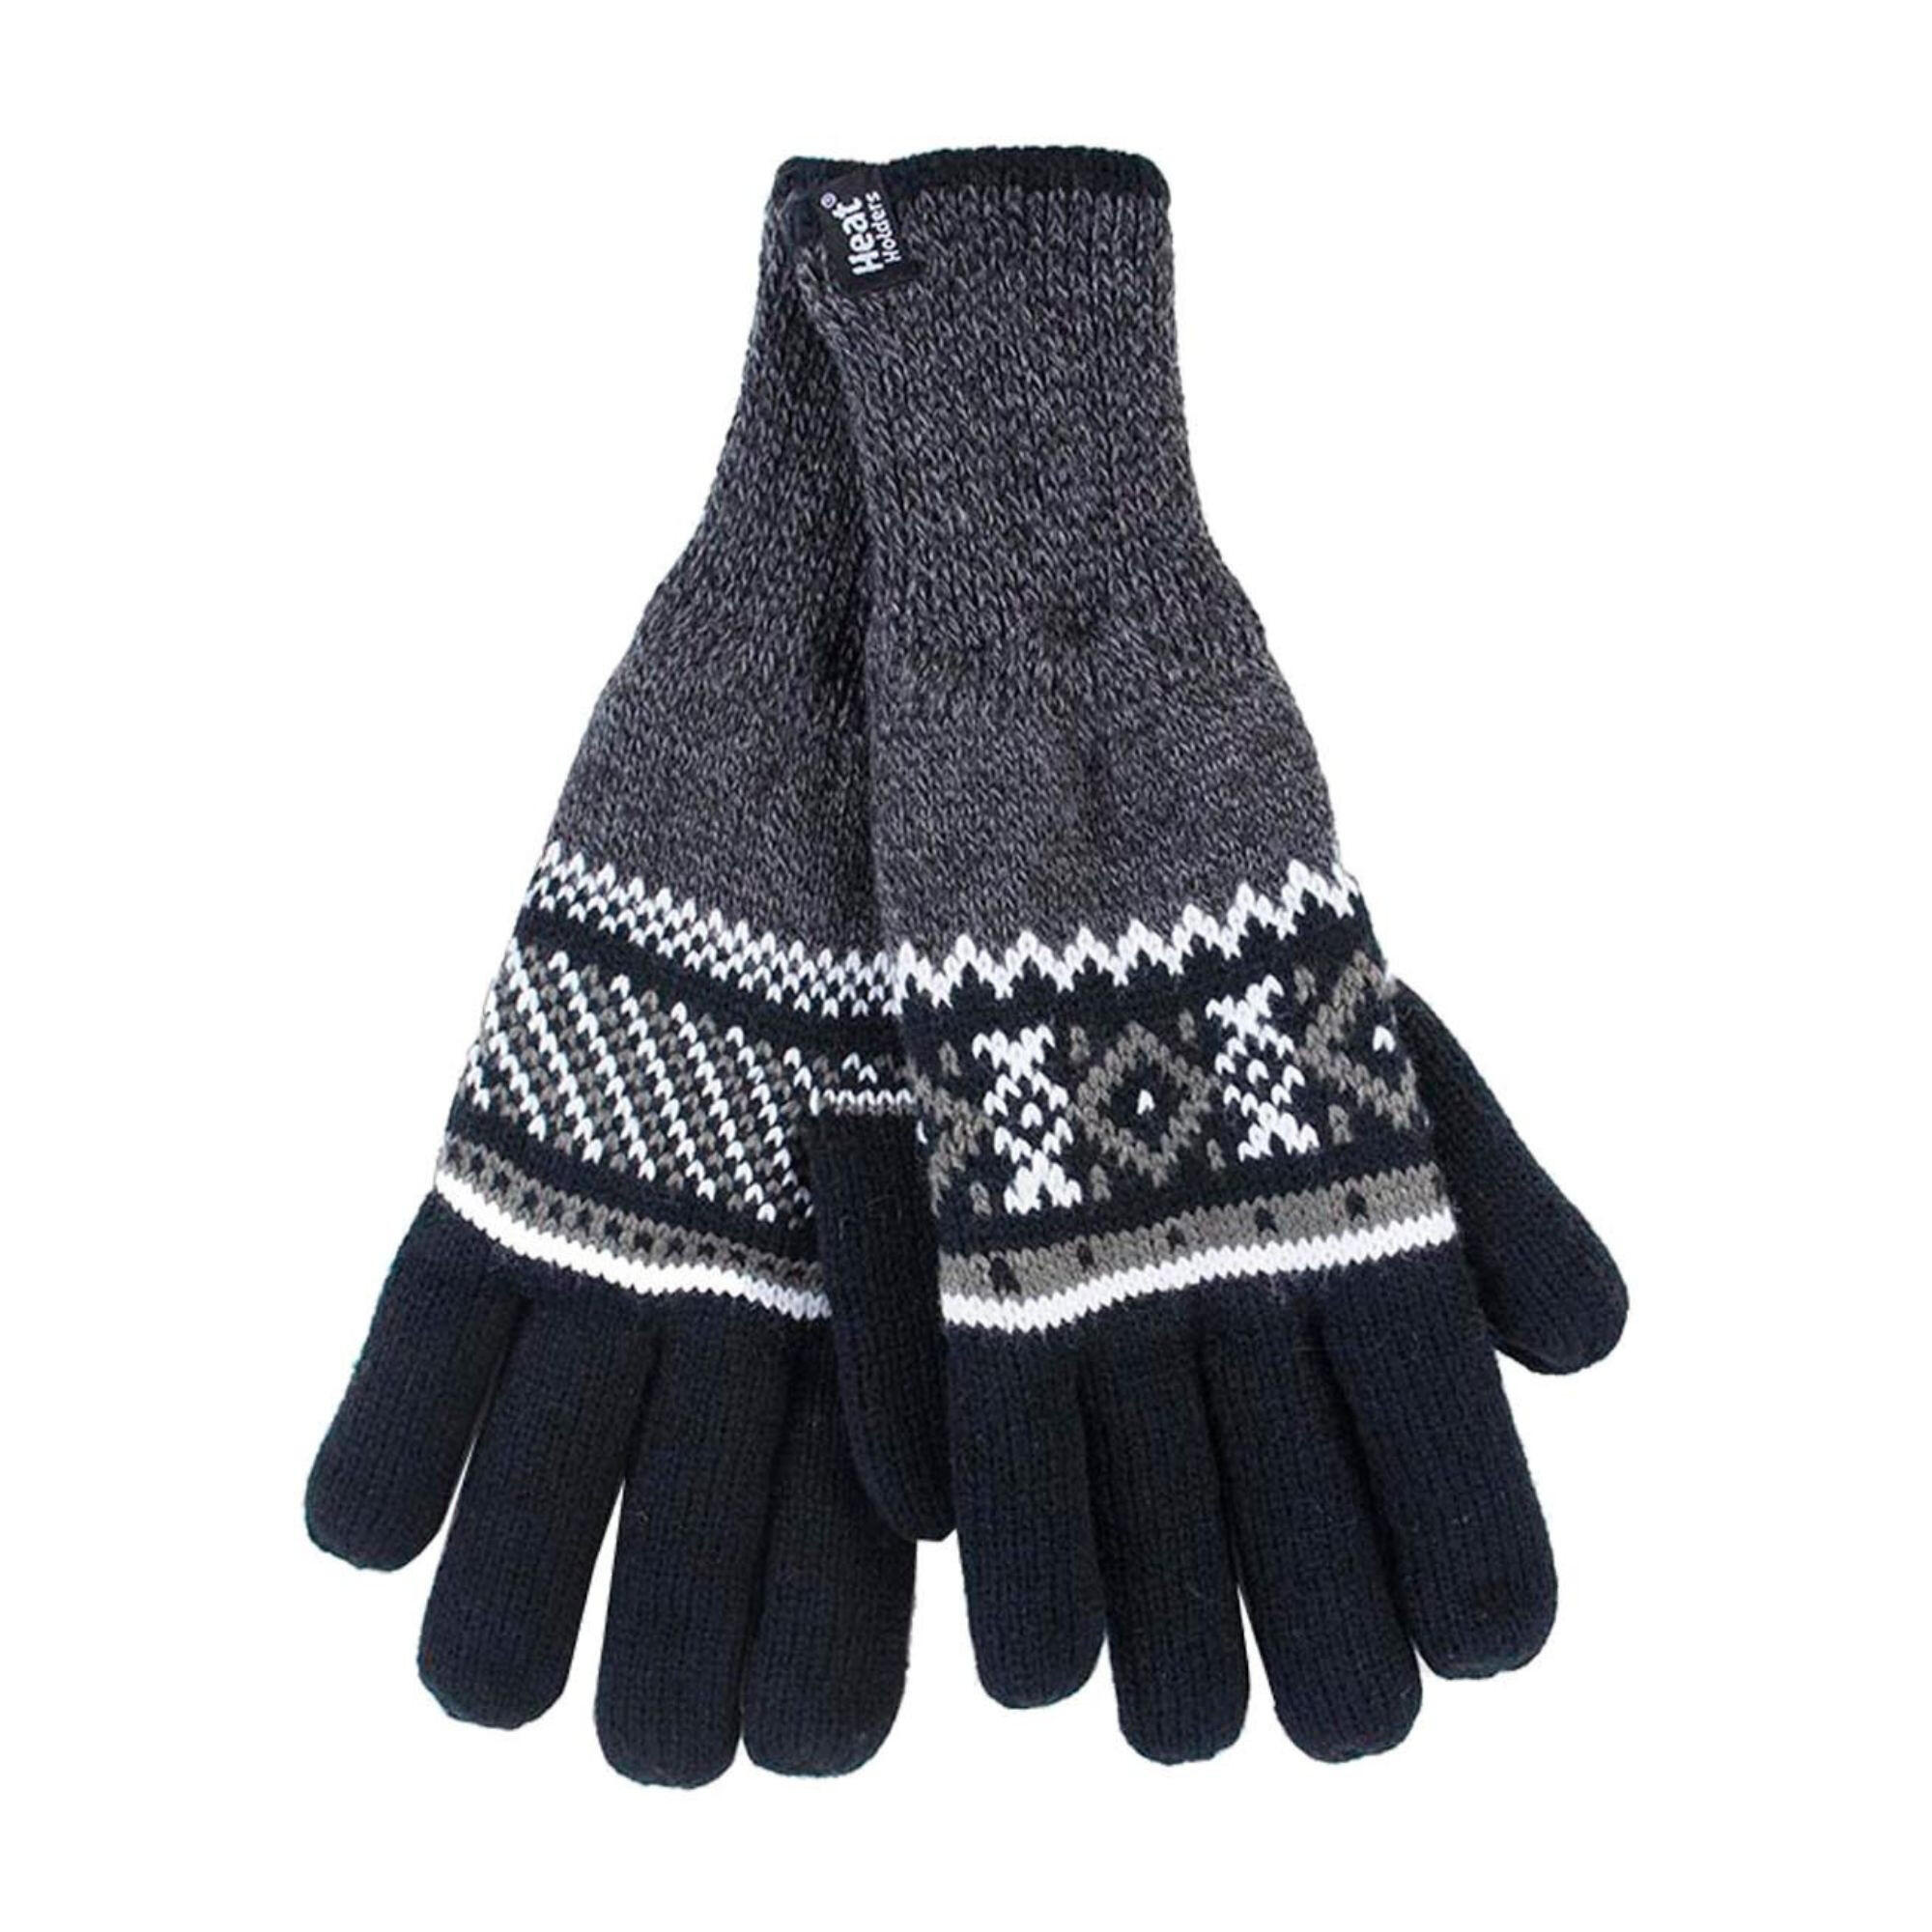 HEAT HOLDERS Mens Nordic Fairisle Knitted Fleece Lined Winter Thermal Gloves